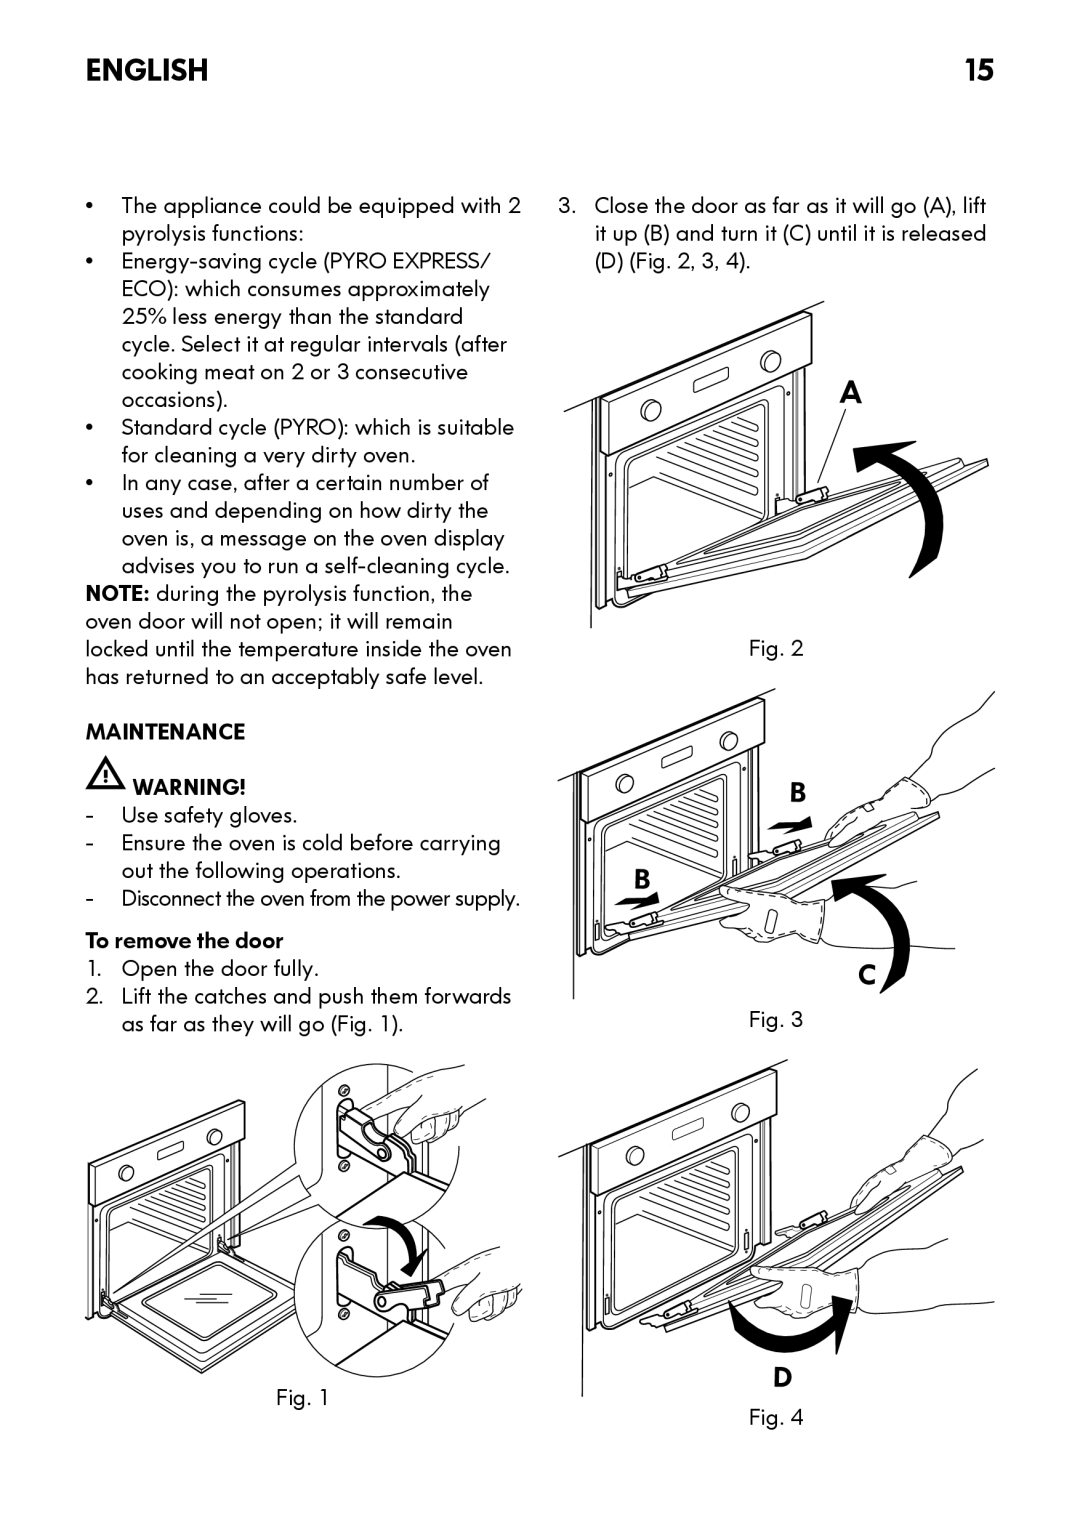 IKEA OV8 manual English, B B C 